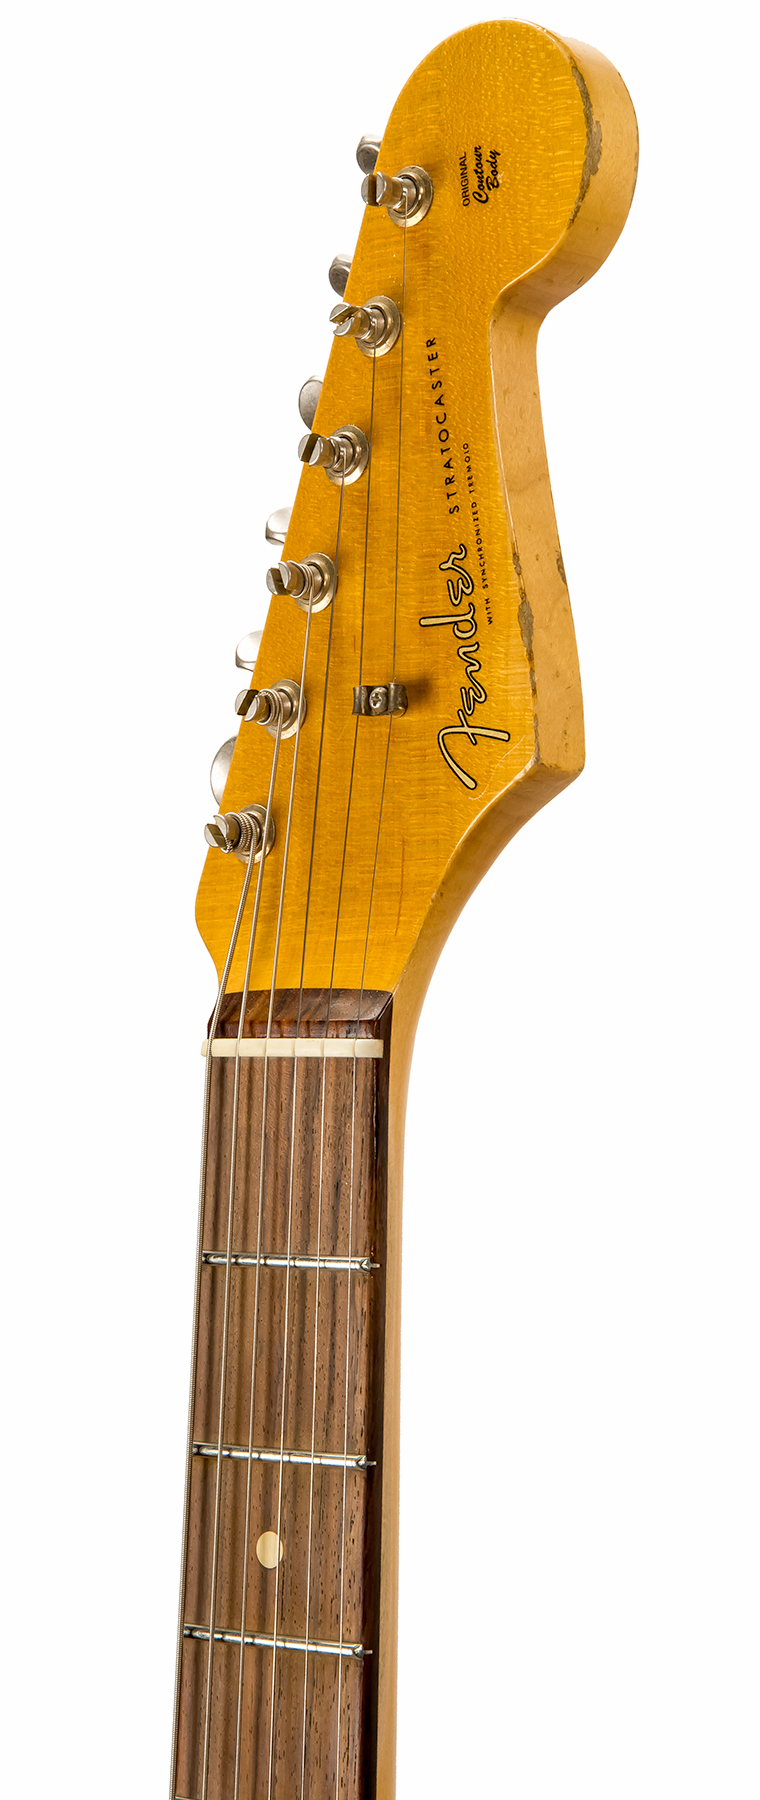 Fender Custom Shop Strat 1960 Rw #cz544406 - Relic Aztec Gold - E-Gitarre in Str-Form - Variation 5